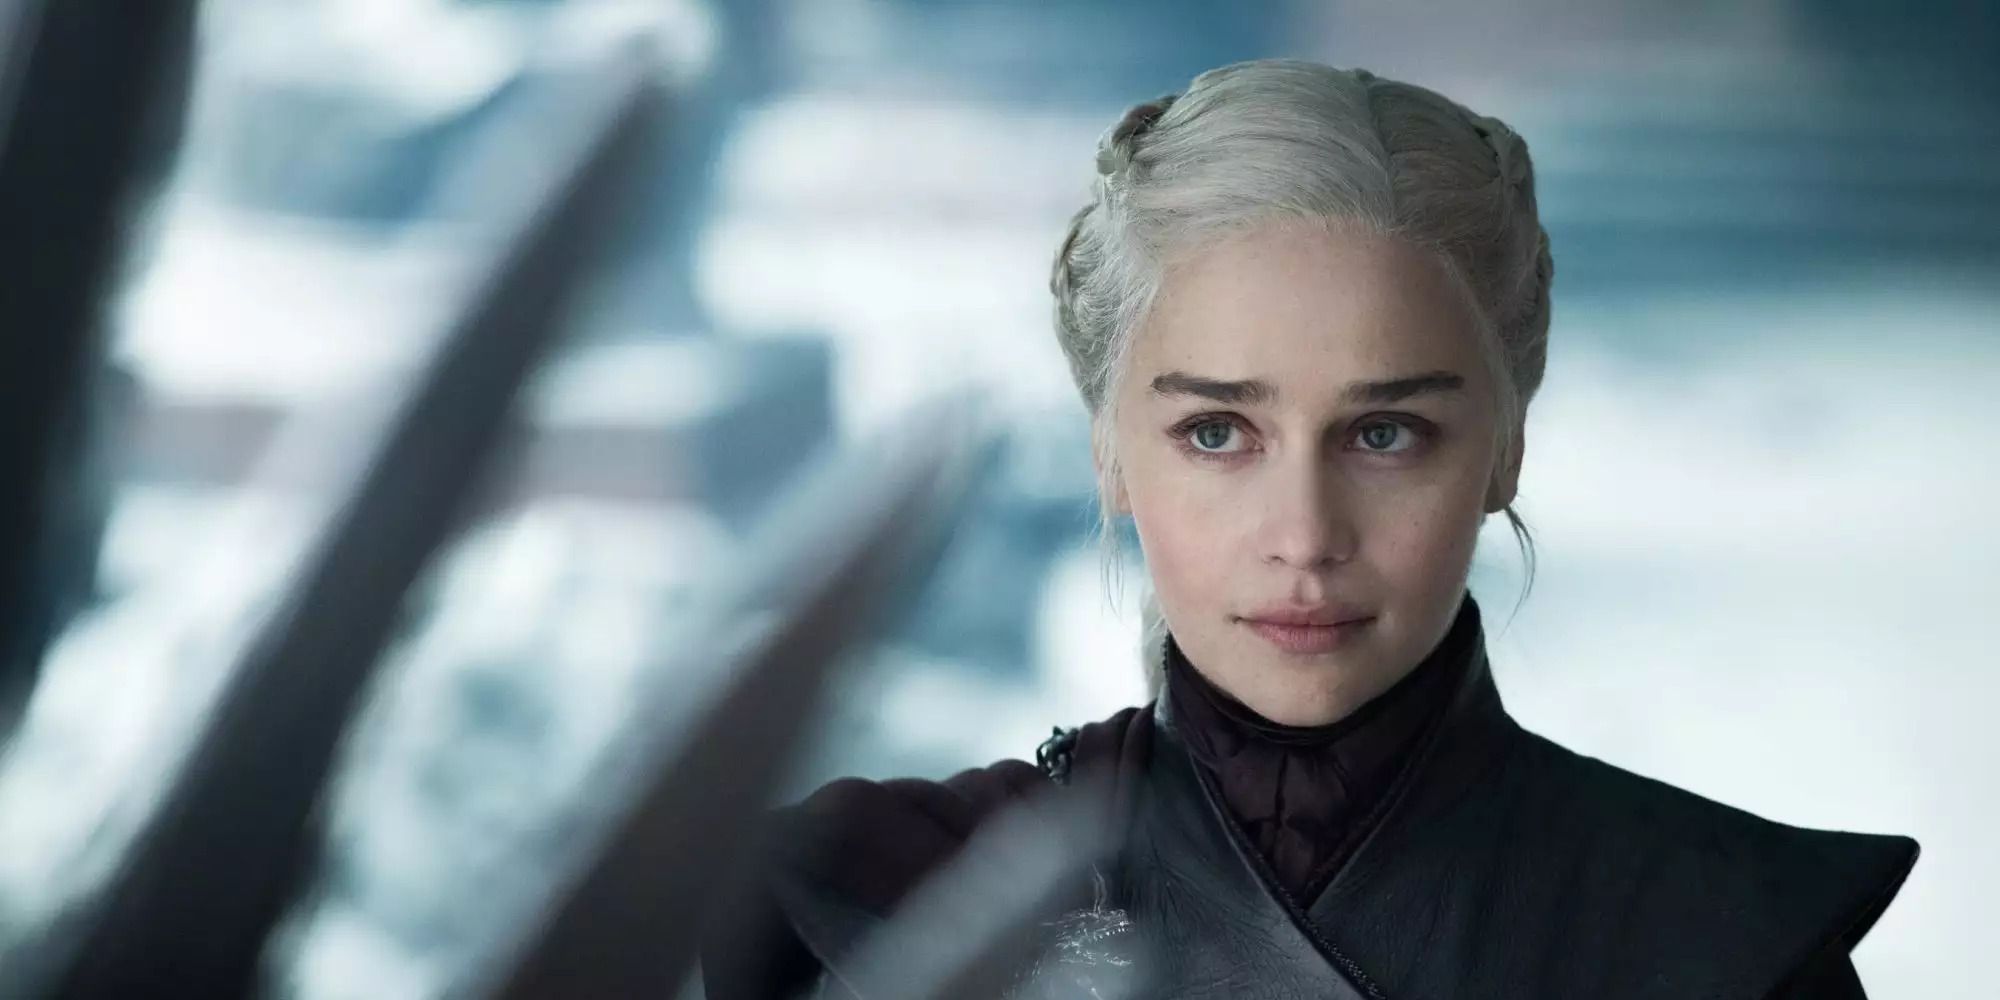 Daenerys Targaryen regarde le trône de fer avec une expression vide dans Game of Thrones.